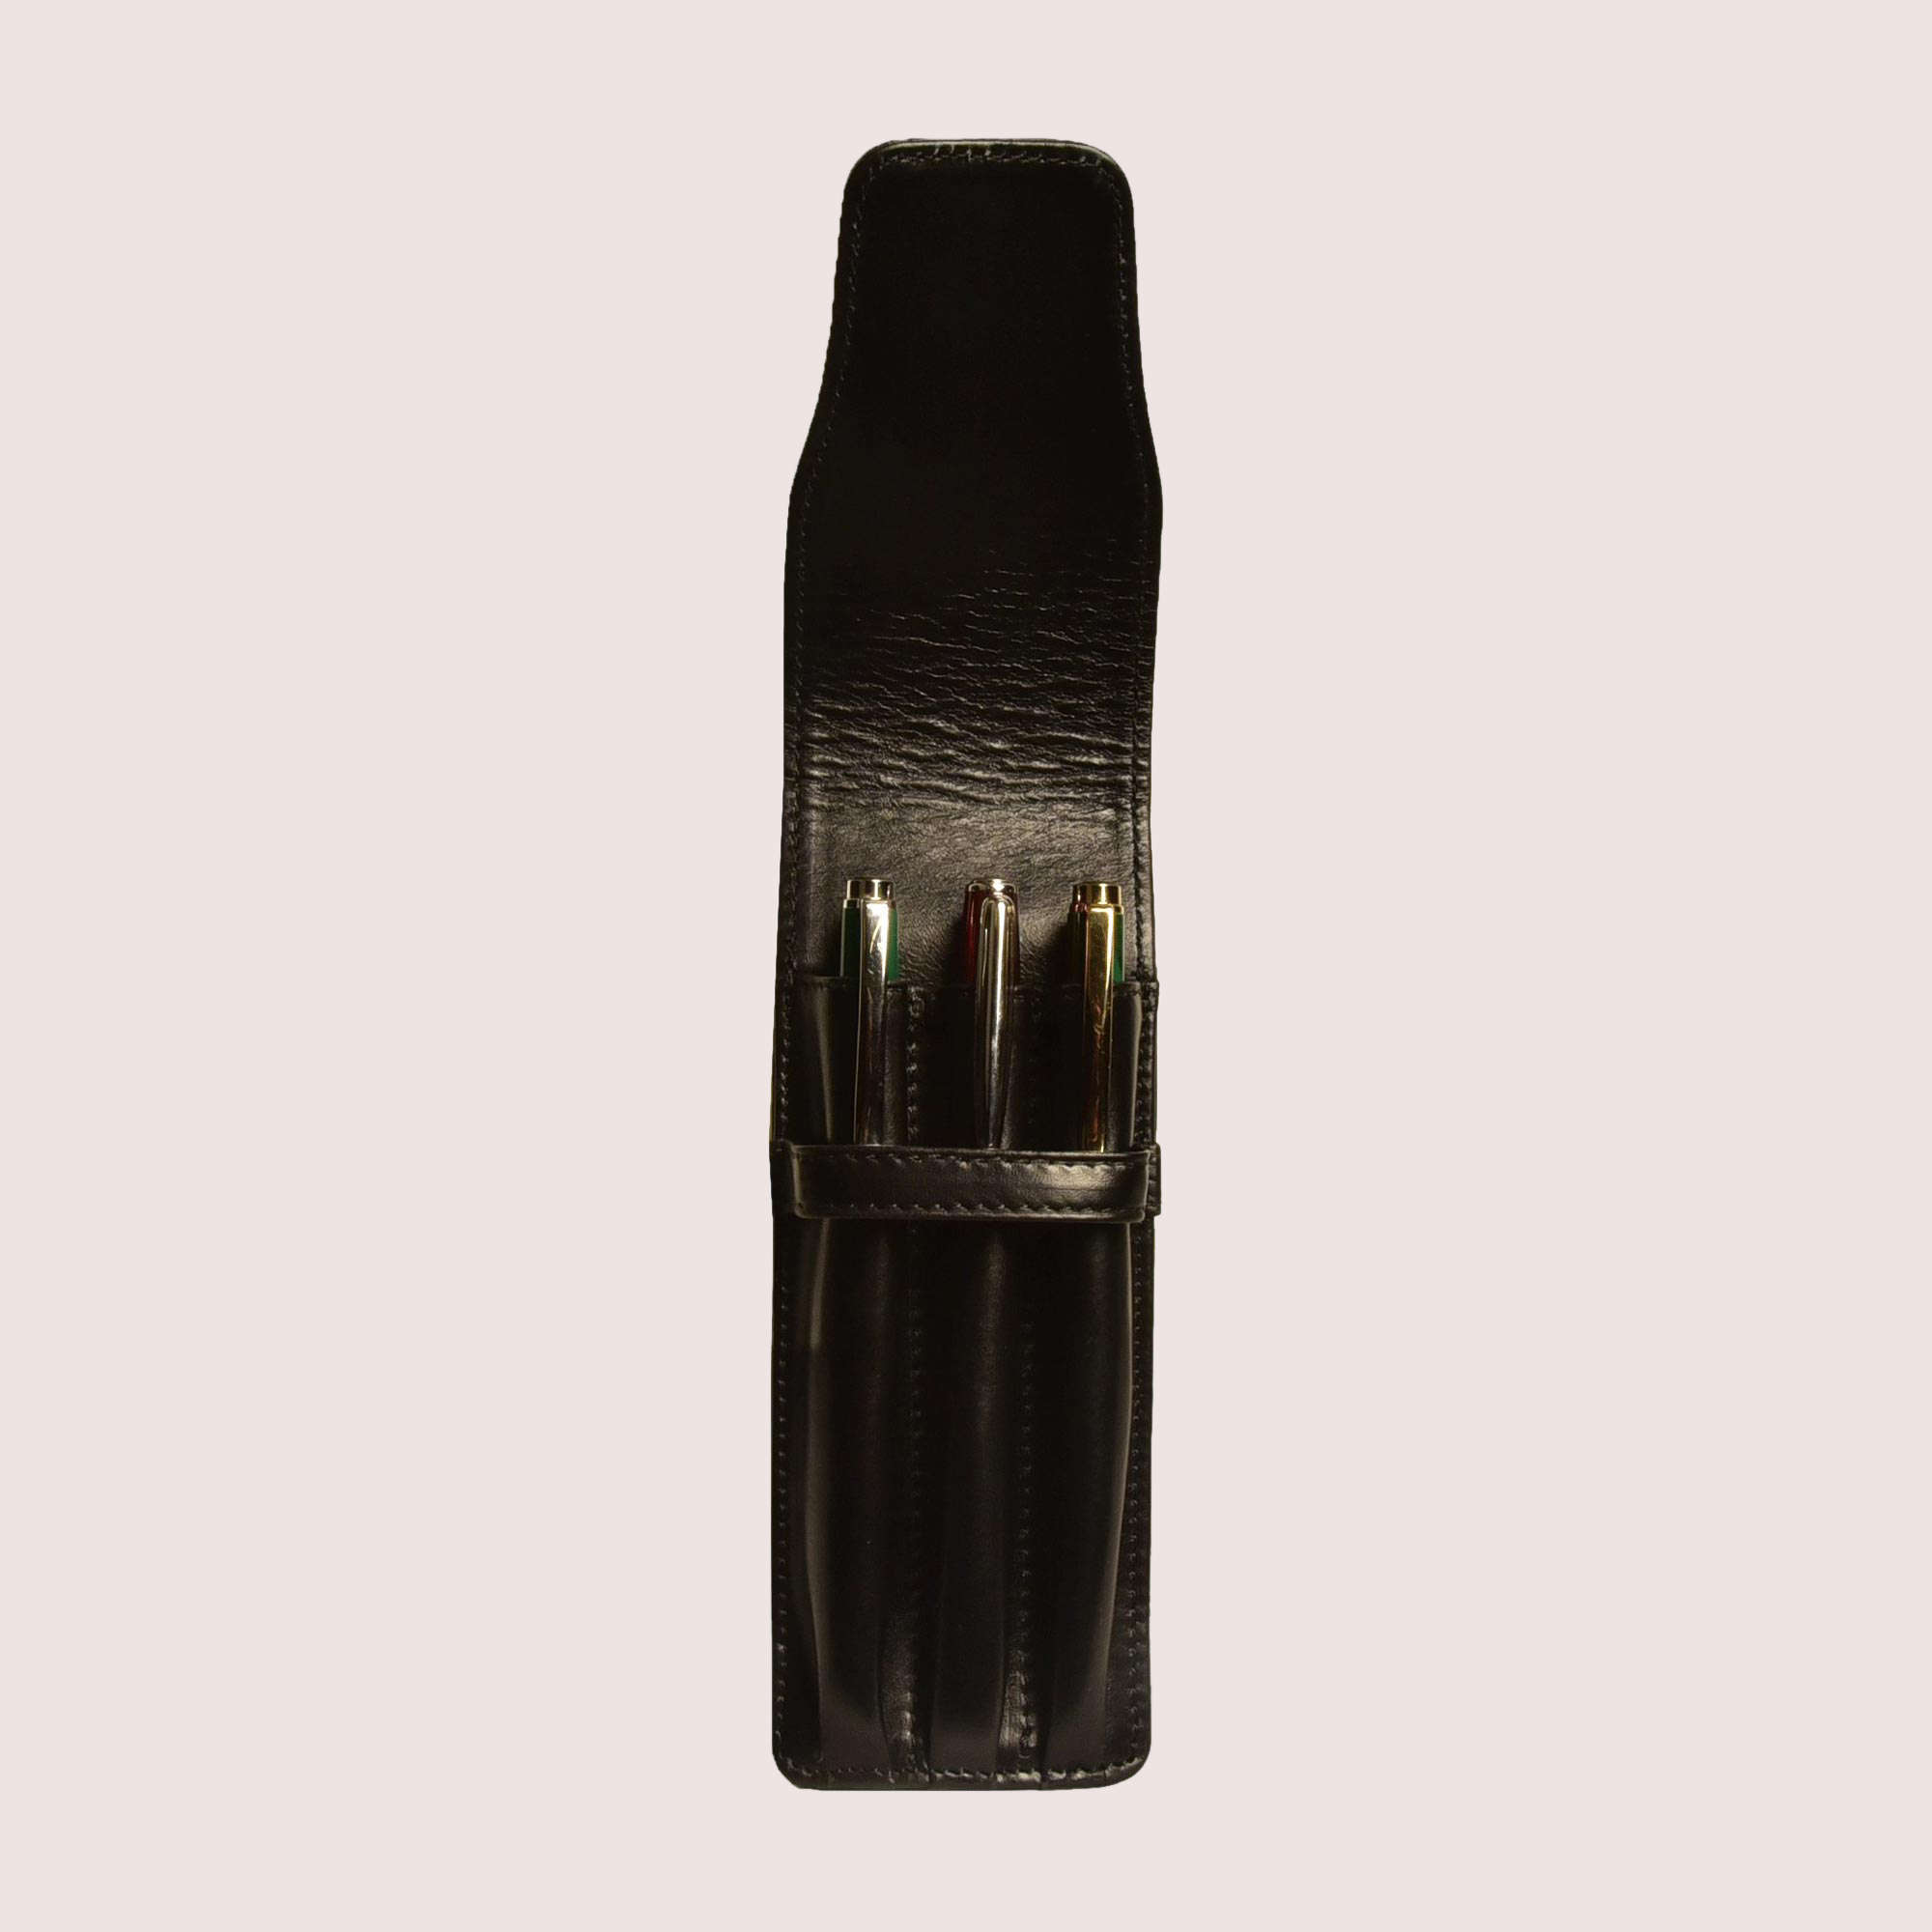 Three Pen Leather Case